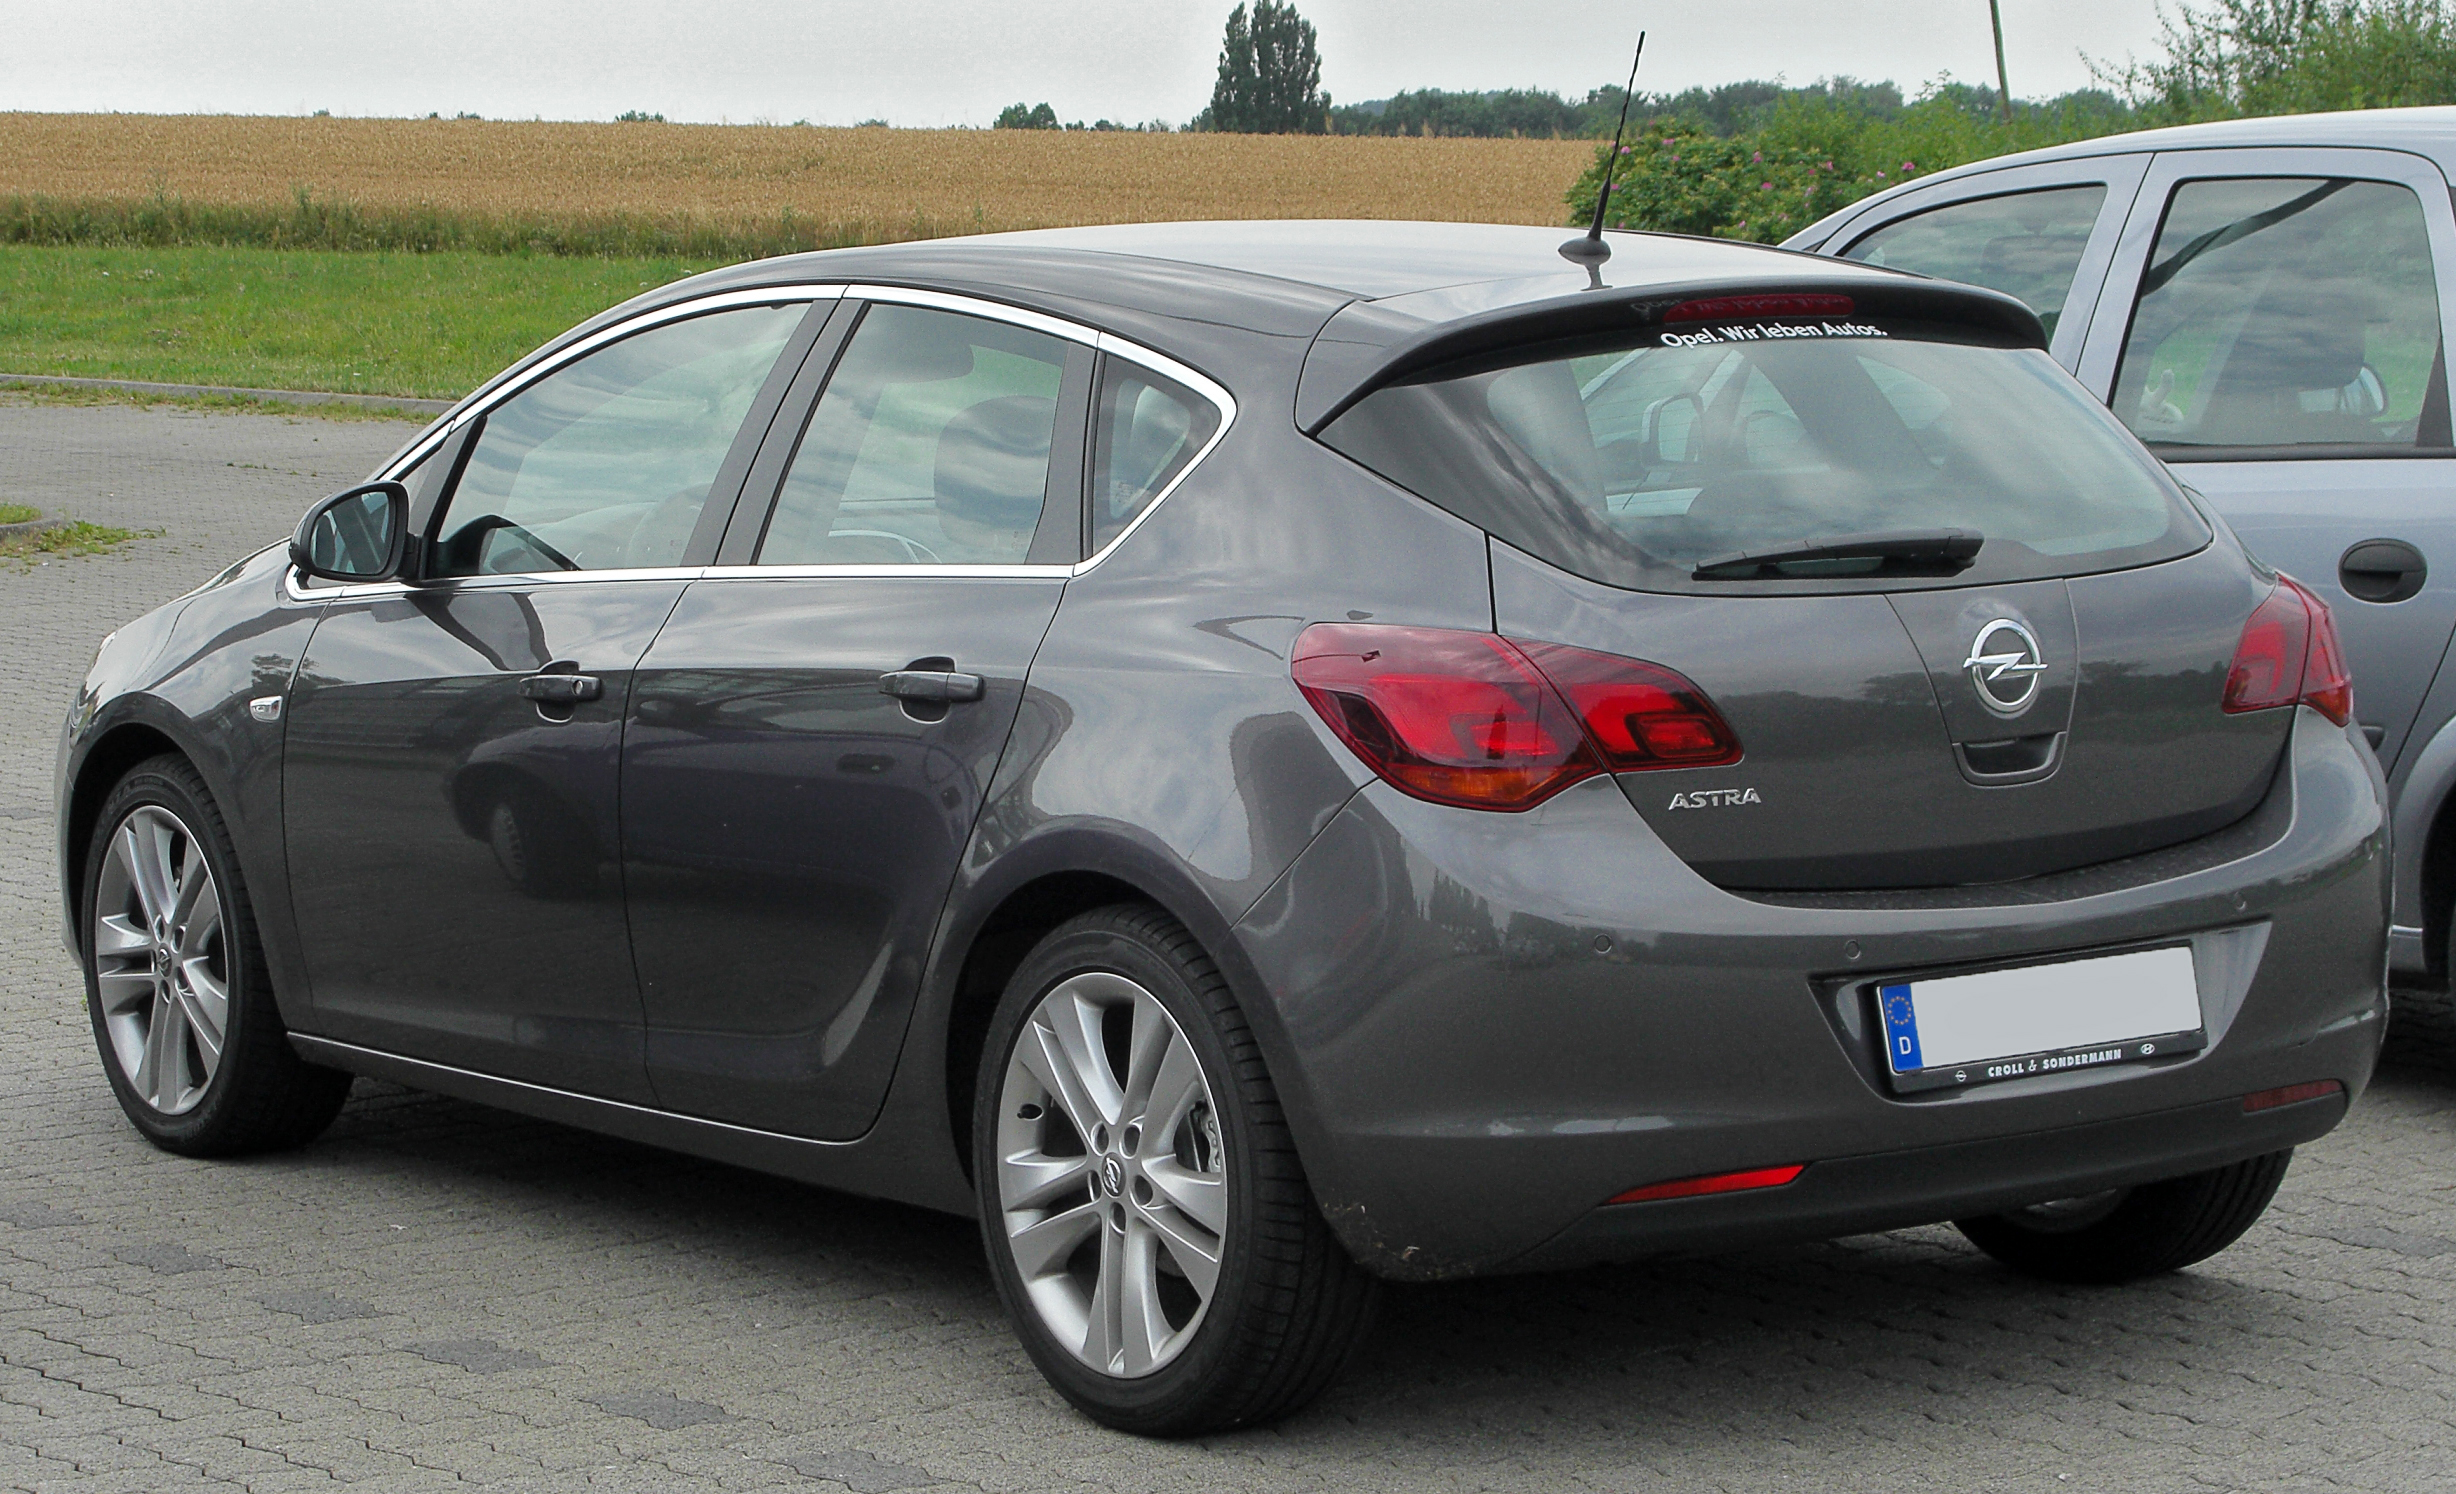 https://upload.wikimedia.org/wikipedia/commons/5/5b/Opel_Astra_J_rear-1_20100725.jpg